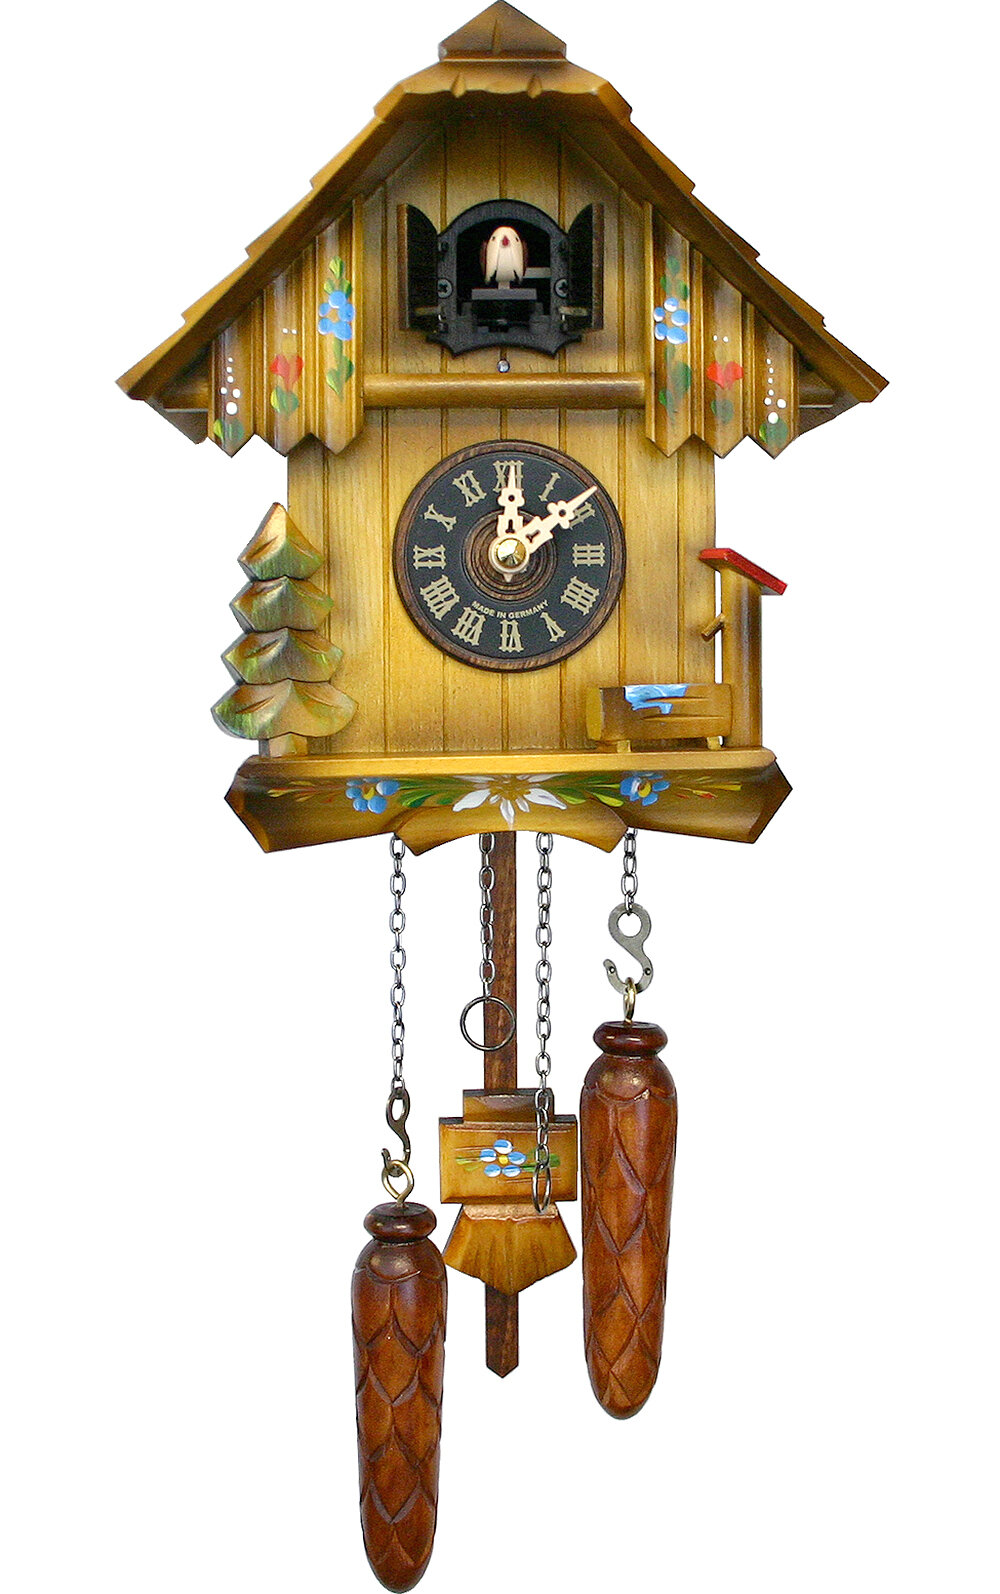 JFJL Vivid Large Cuckoo Clock Kitchen & Home Wall Cuckoo Clock,Chime Has Automatic Shut-Off,Dark brown